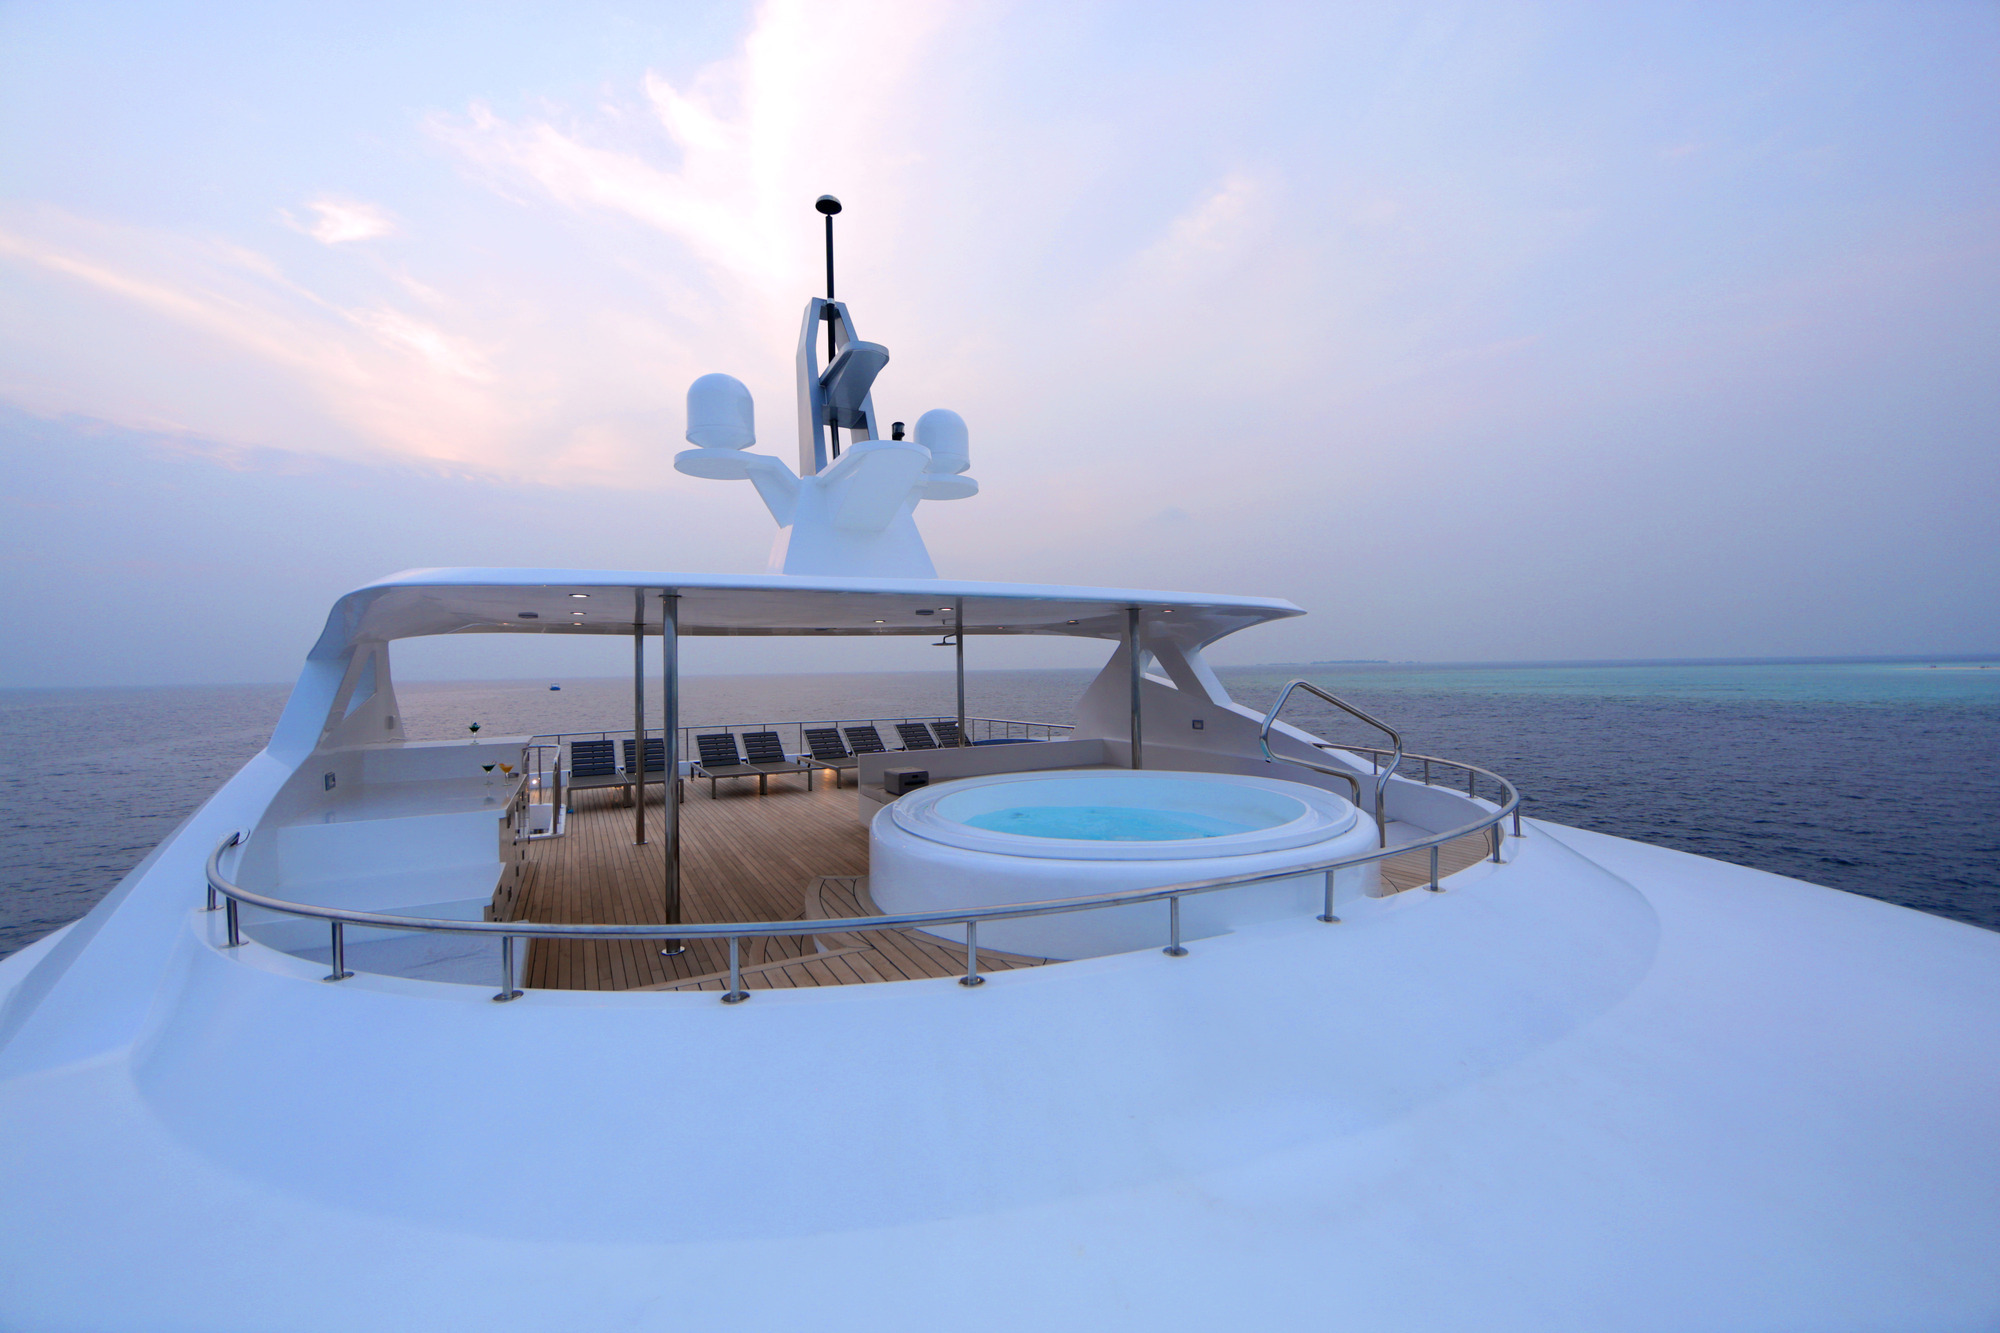 Maldives Motor Yacht SEAREX - Sundeck With Hot Tub